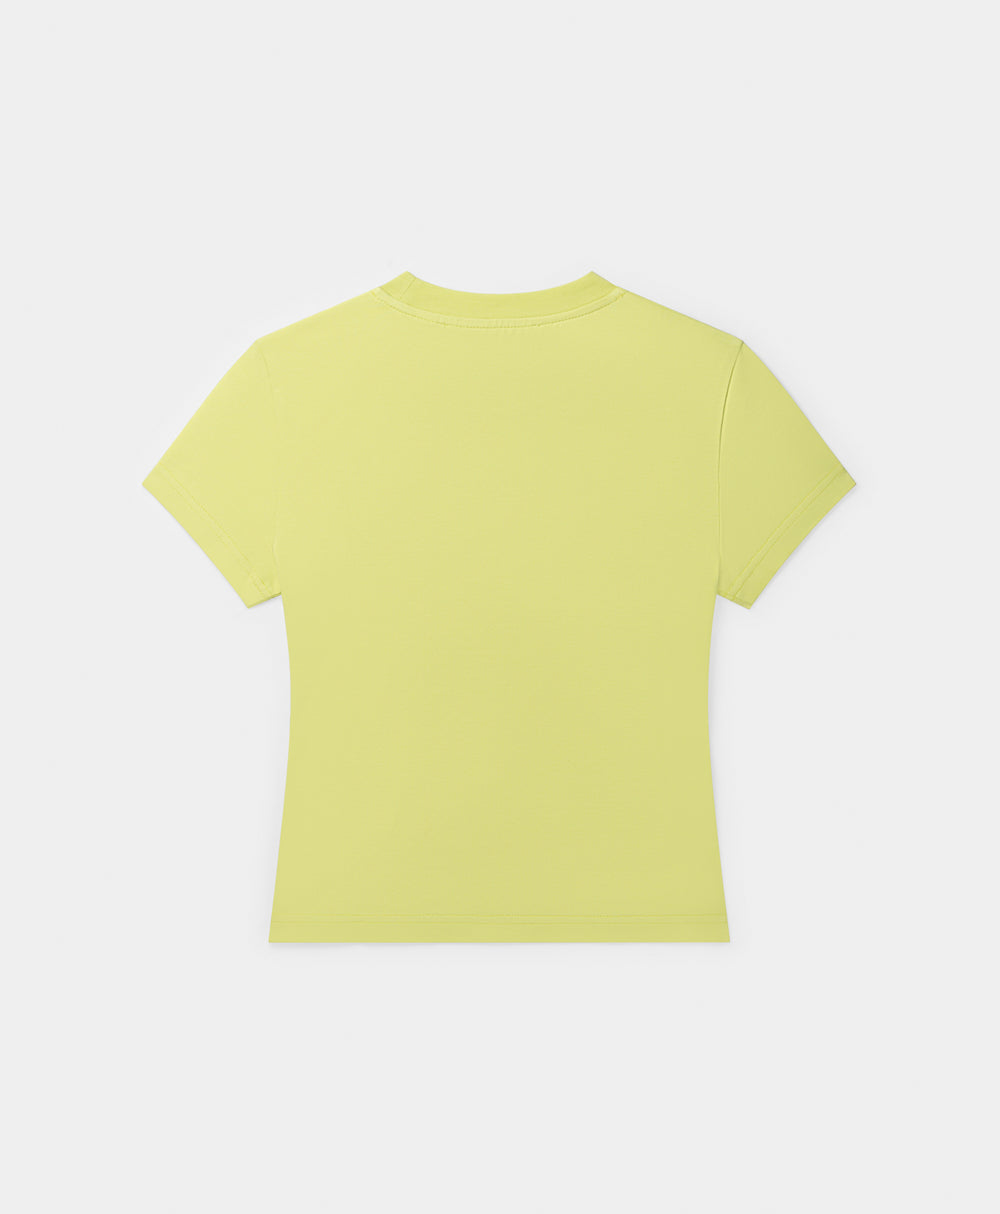 DP - Daiquiri Green Logotype Cropped T-Shirt - Packshot - Rear